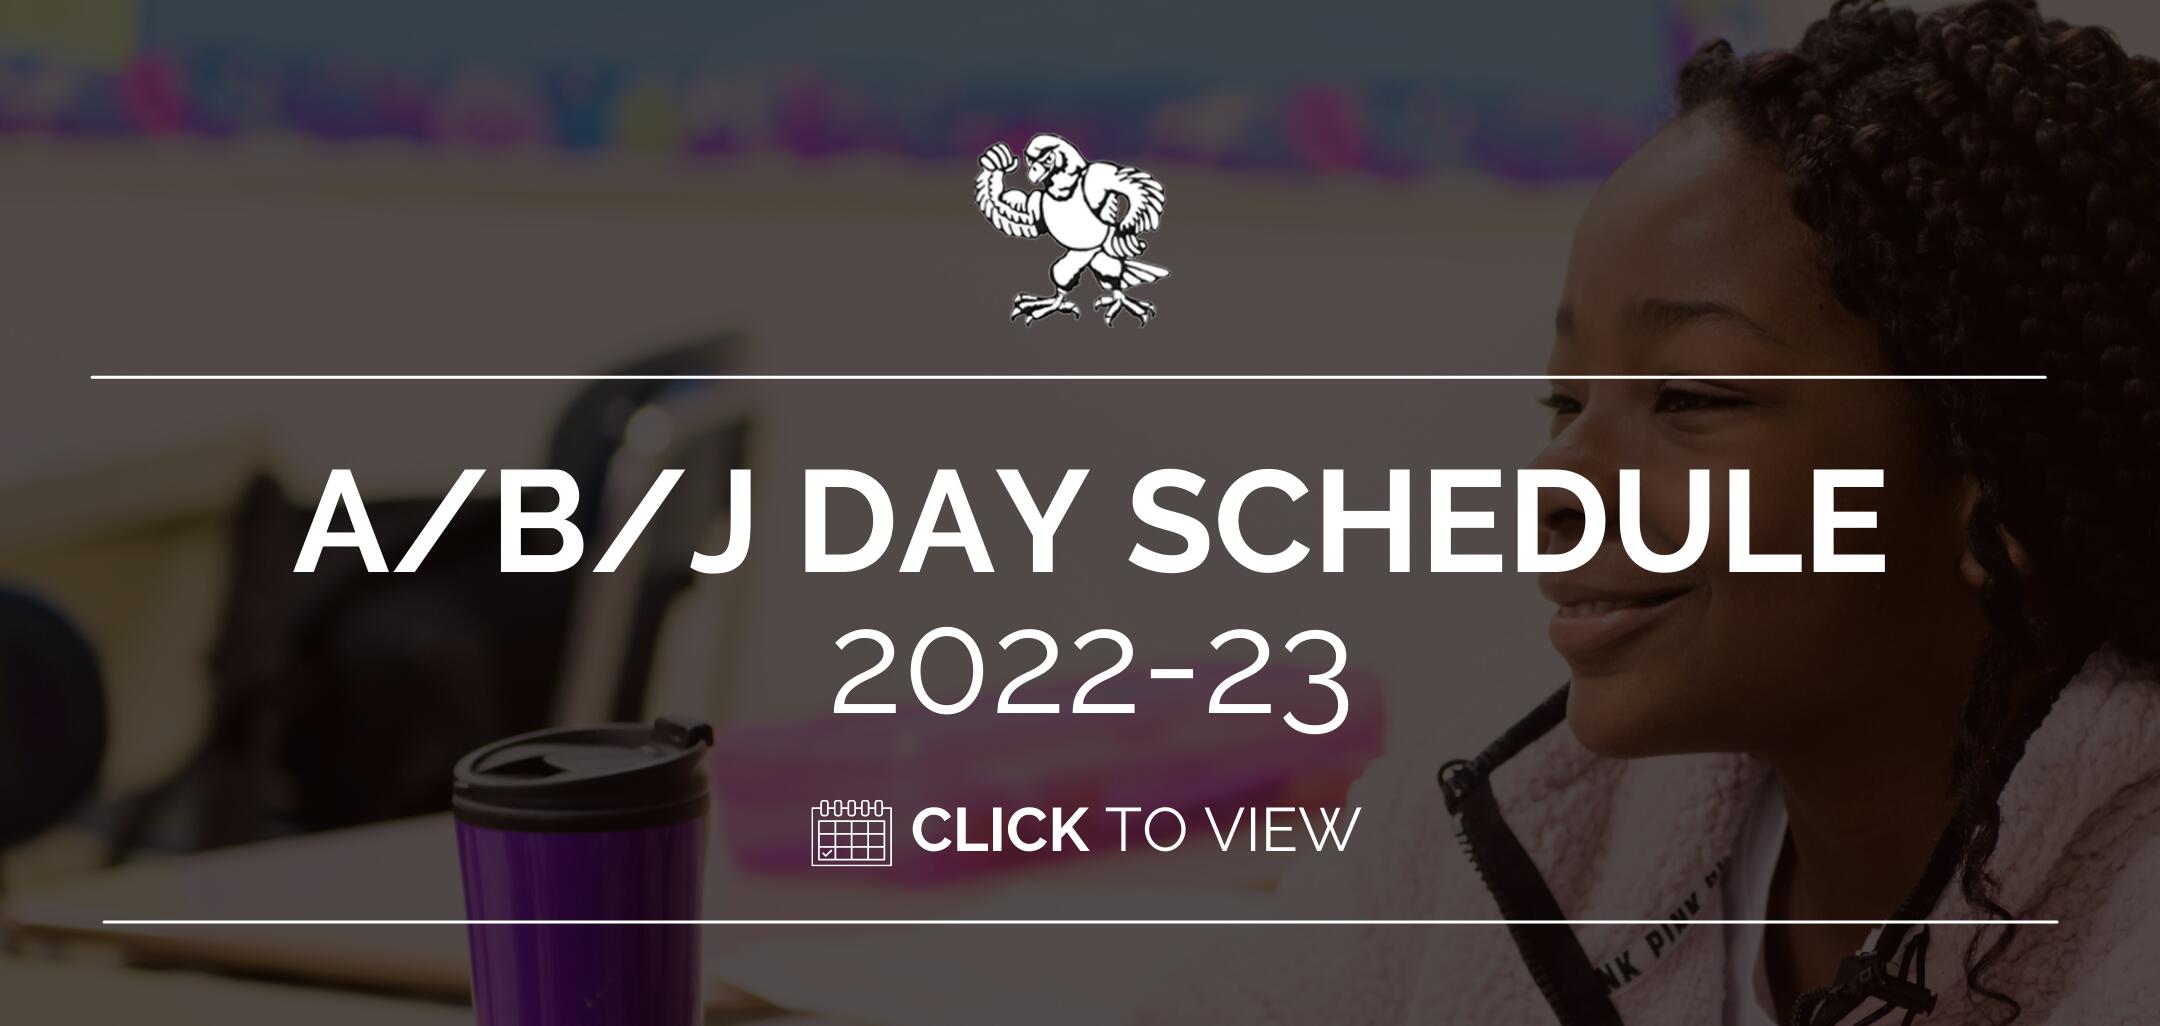 Click to view the 2022-23 Julian A/B/J Calendar